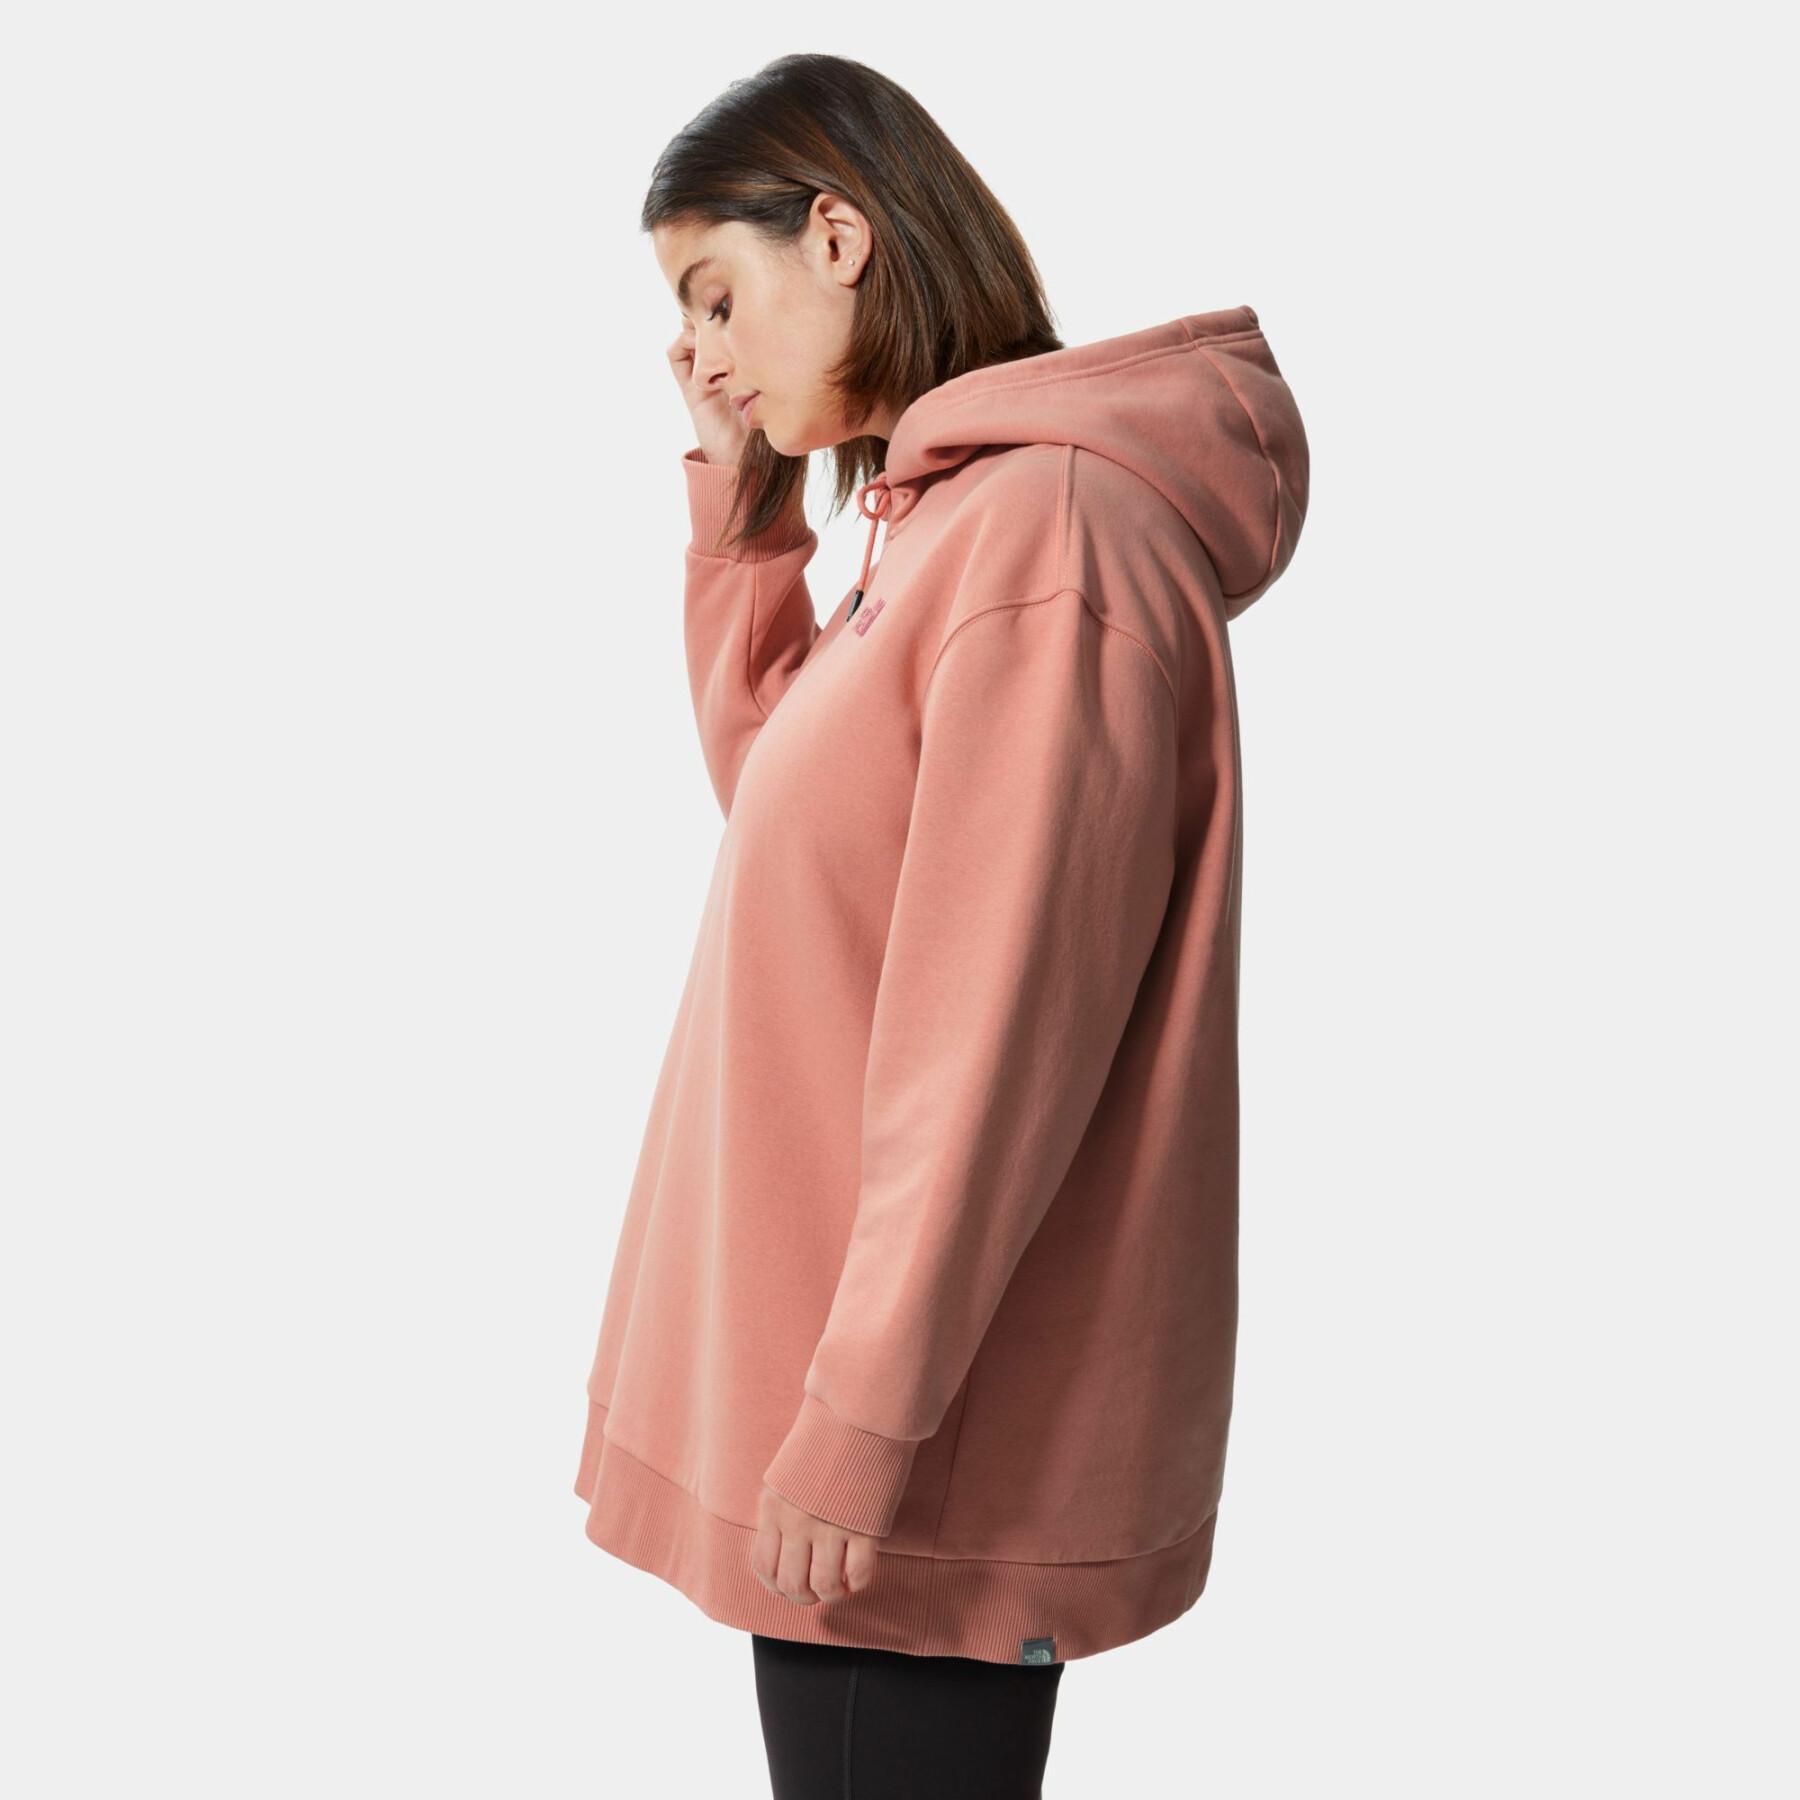 Sweatshirt oversized femme The North Face Essential - Plus